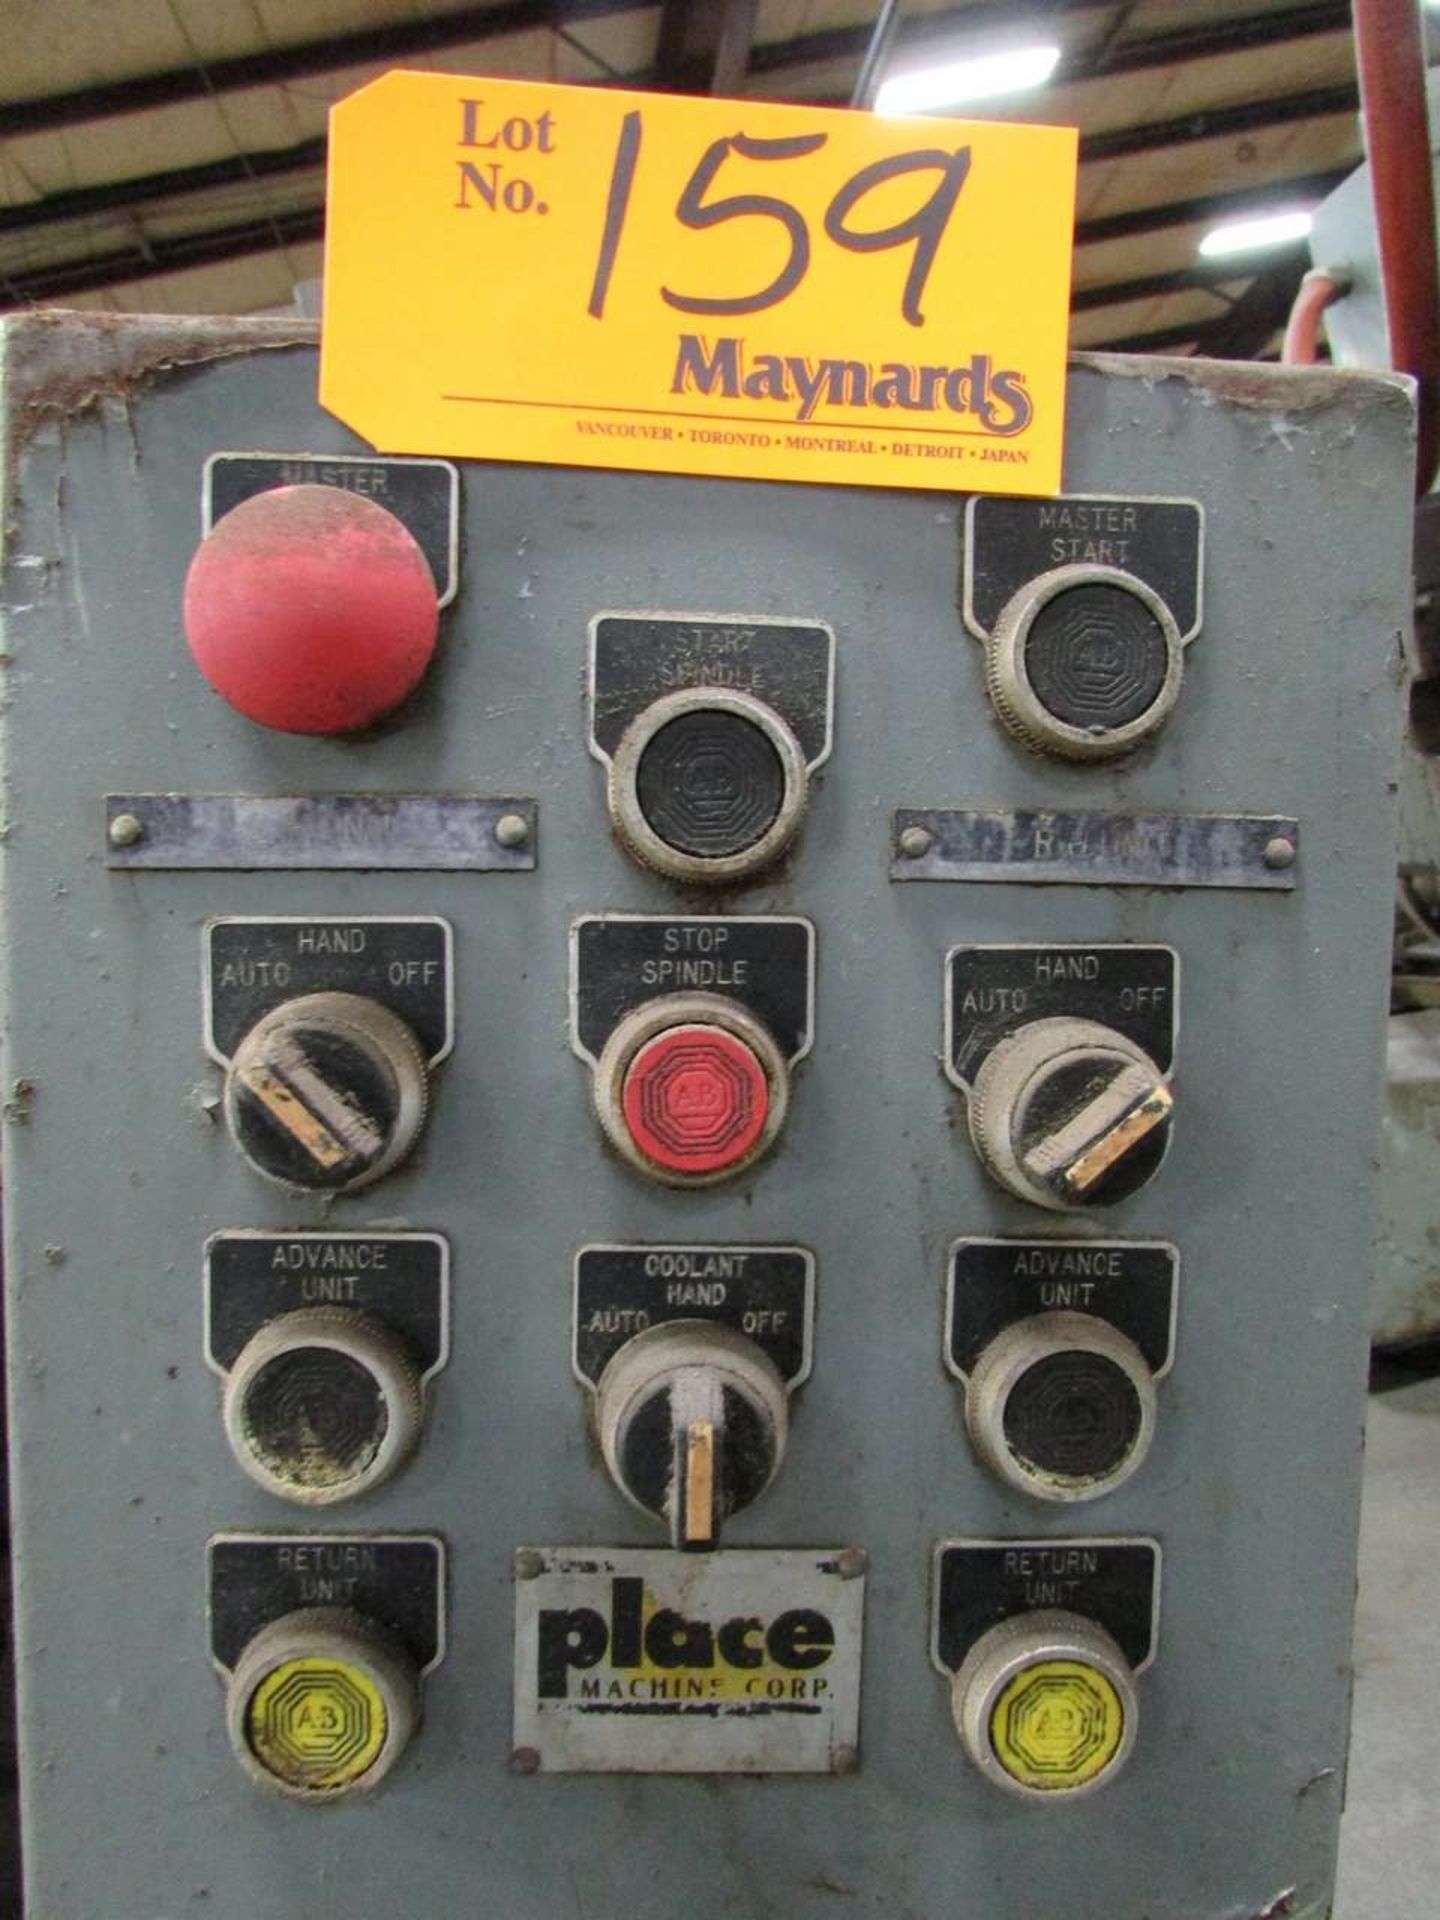 Place Machine Corp. Twin Angle Head Drill Press - Image 8 of 11